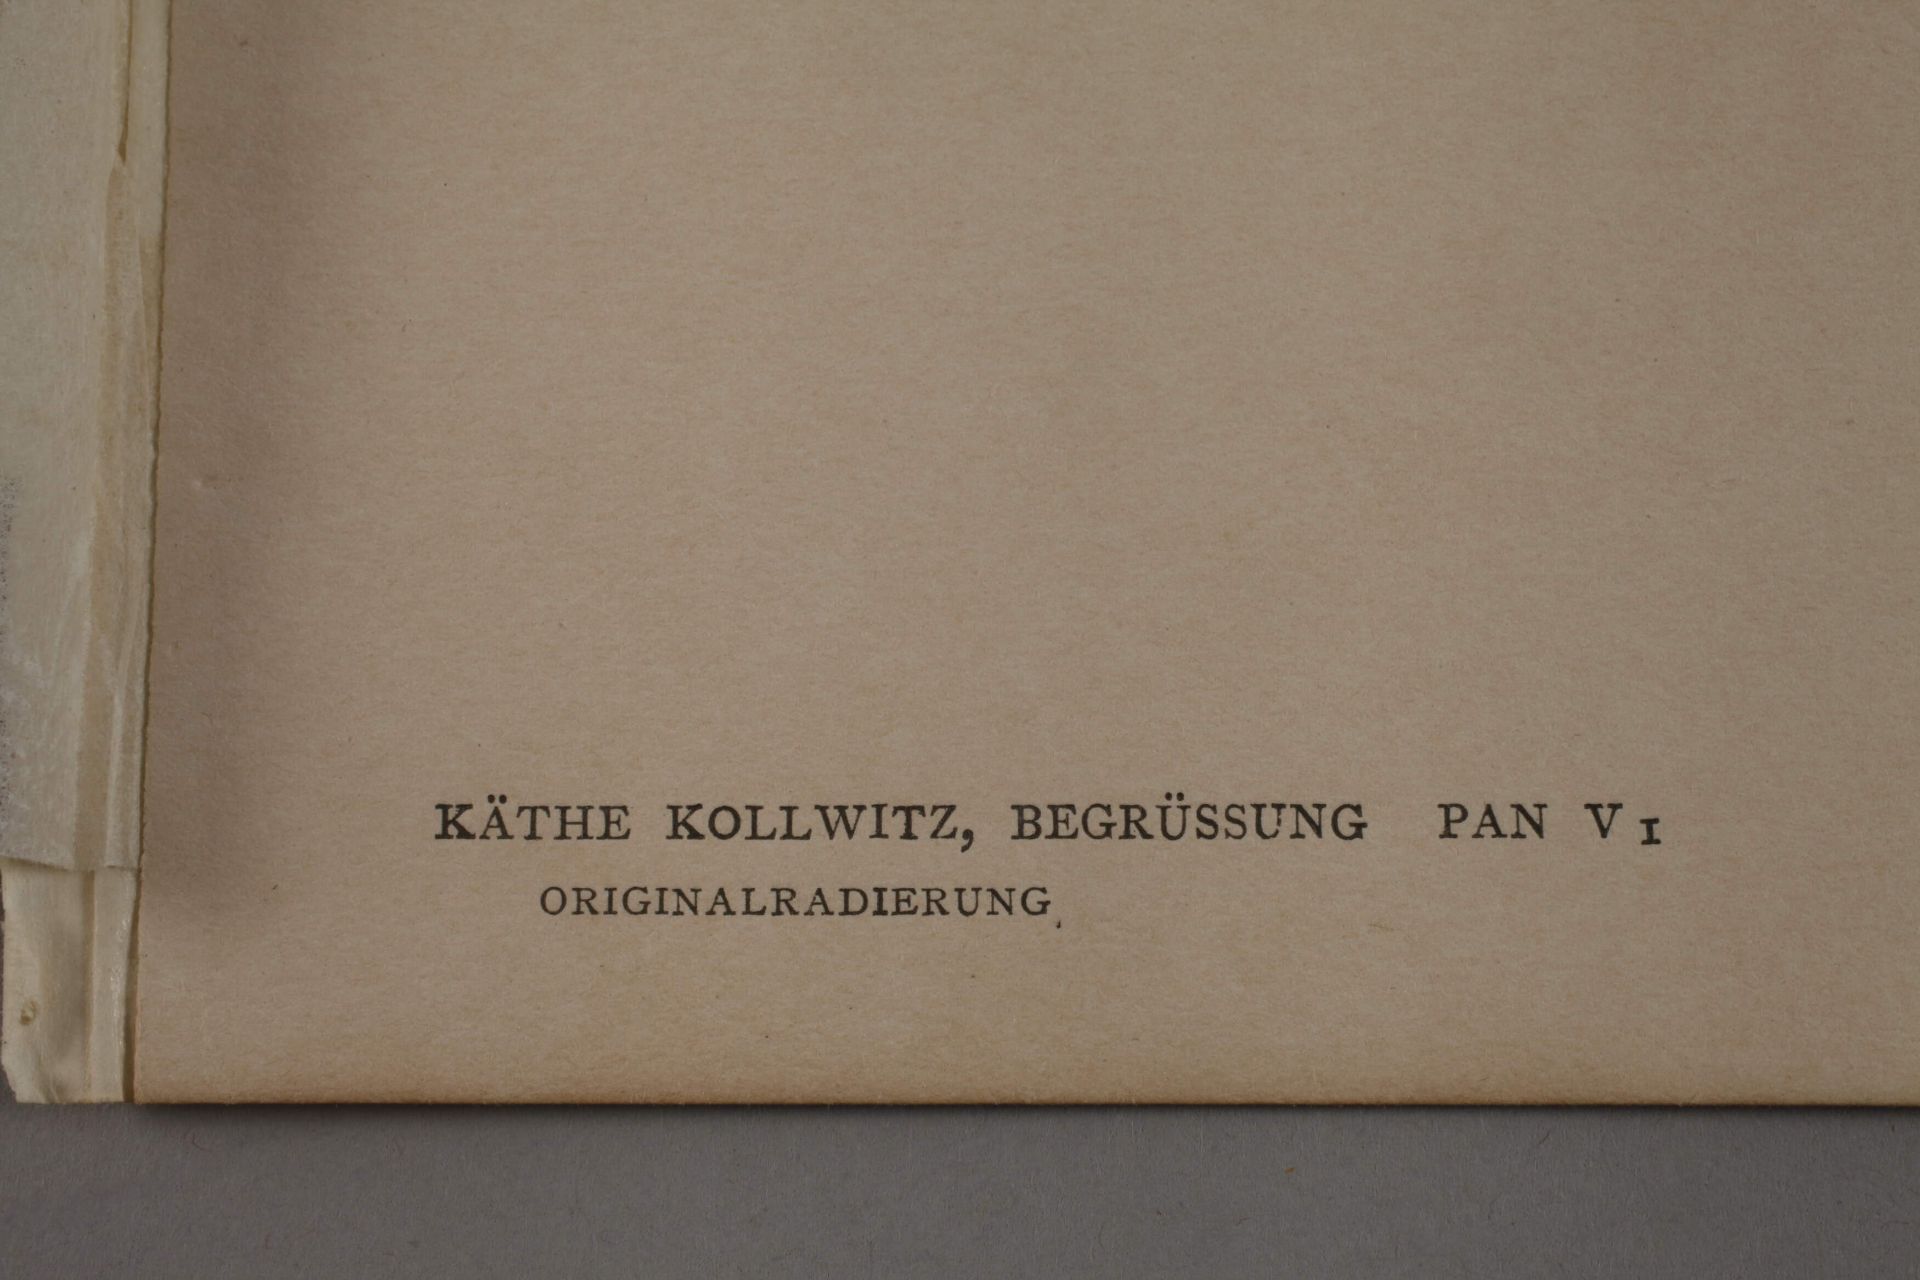 Prof. Käthe Kollwitz, "Begrüssung" - Image 3 of 3